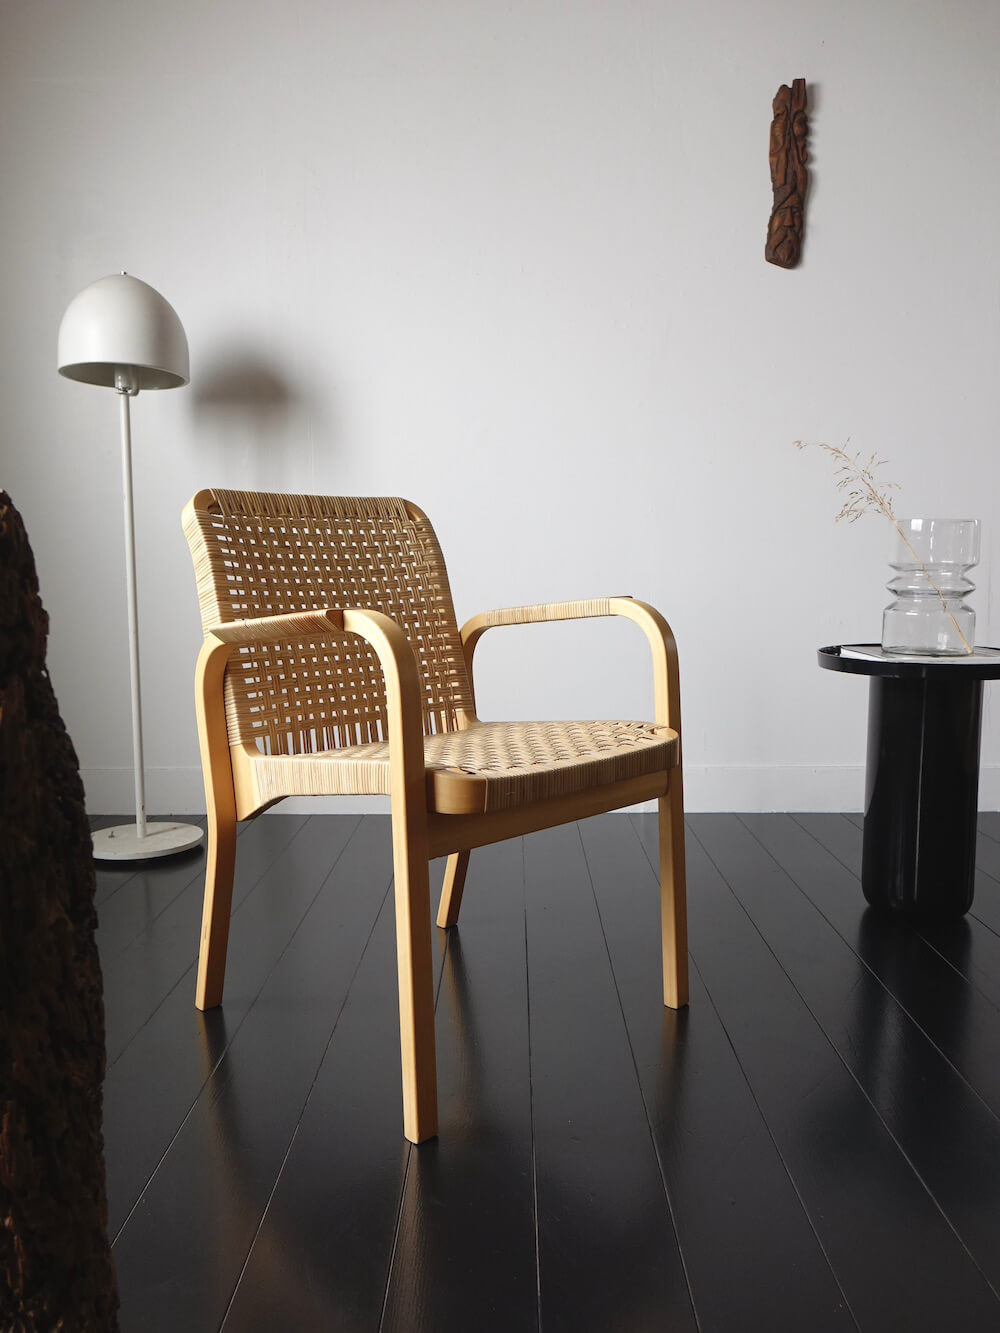 No.45 Arm chair by Alvar Aalto for Artek